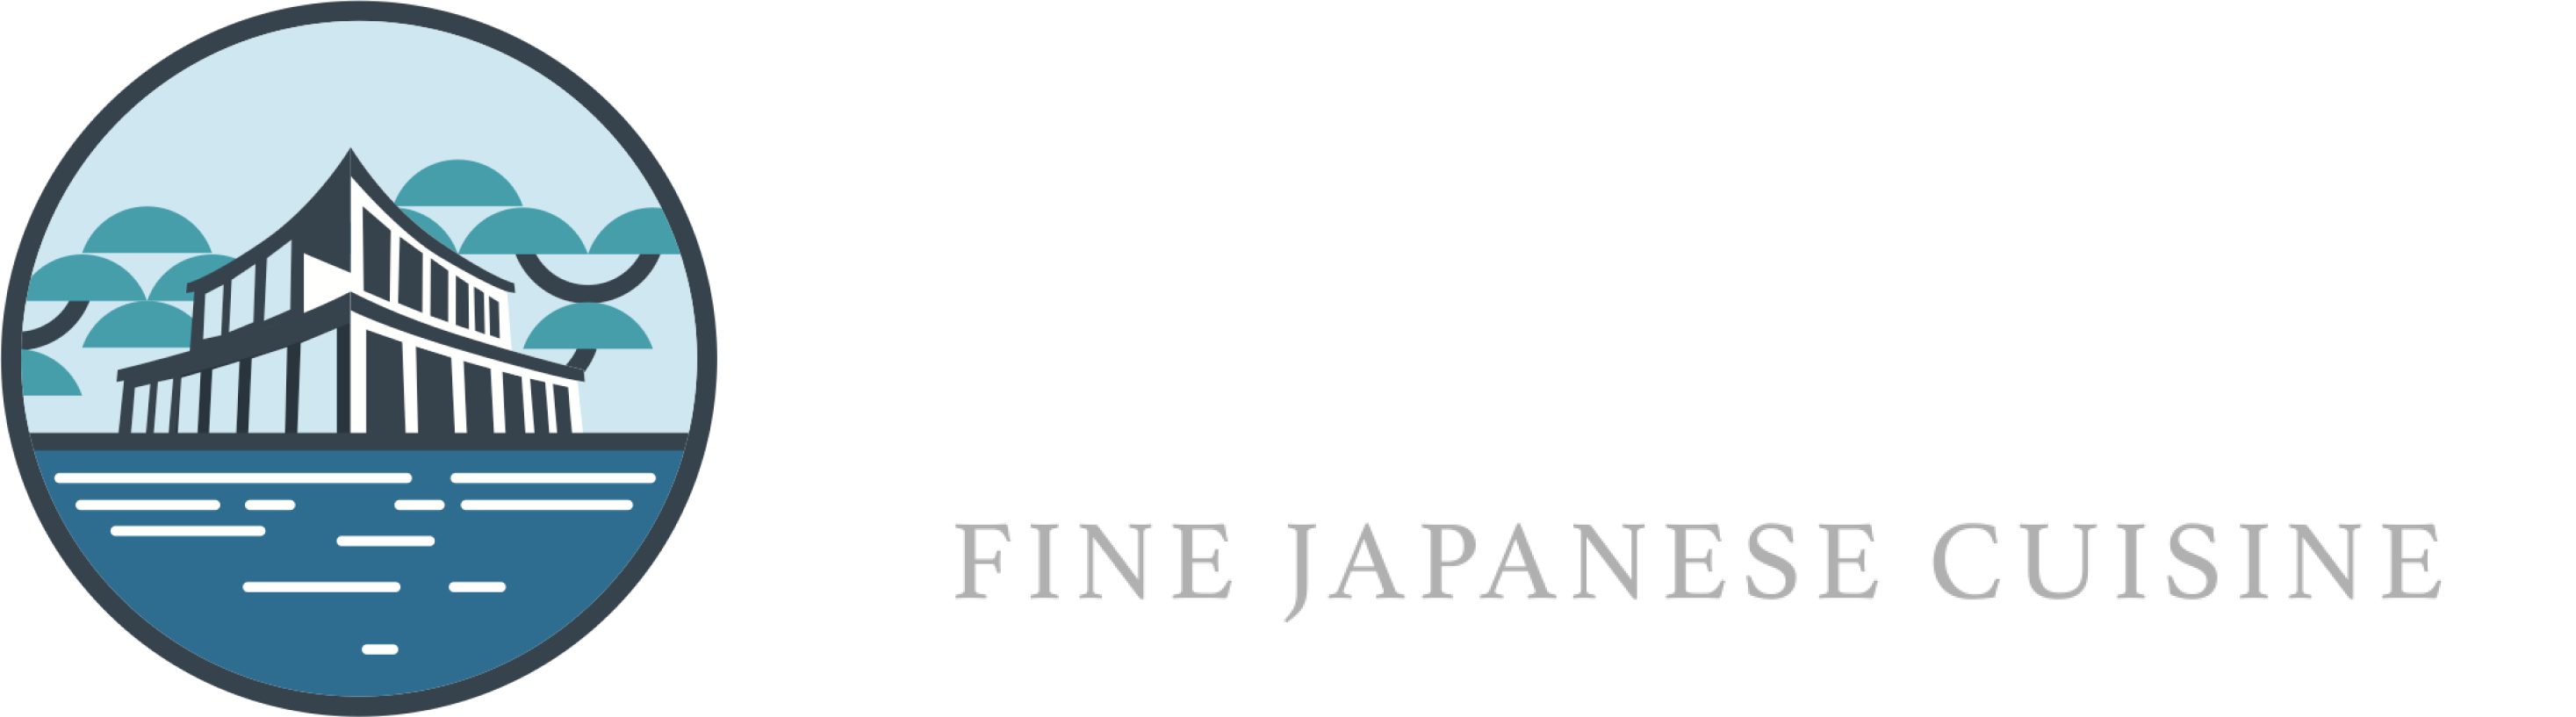 Japans Restaurant Mizumi